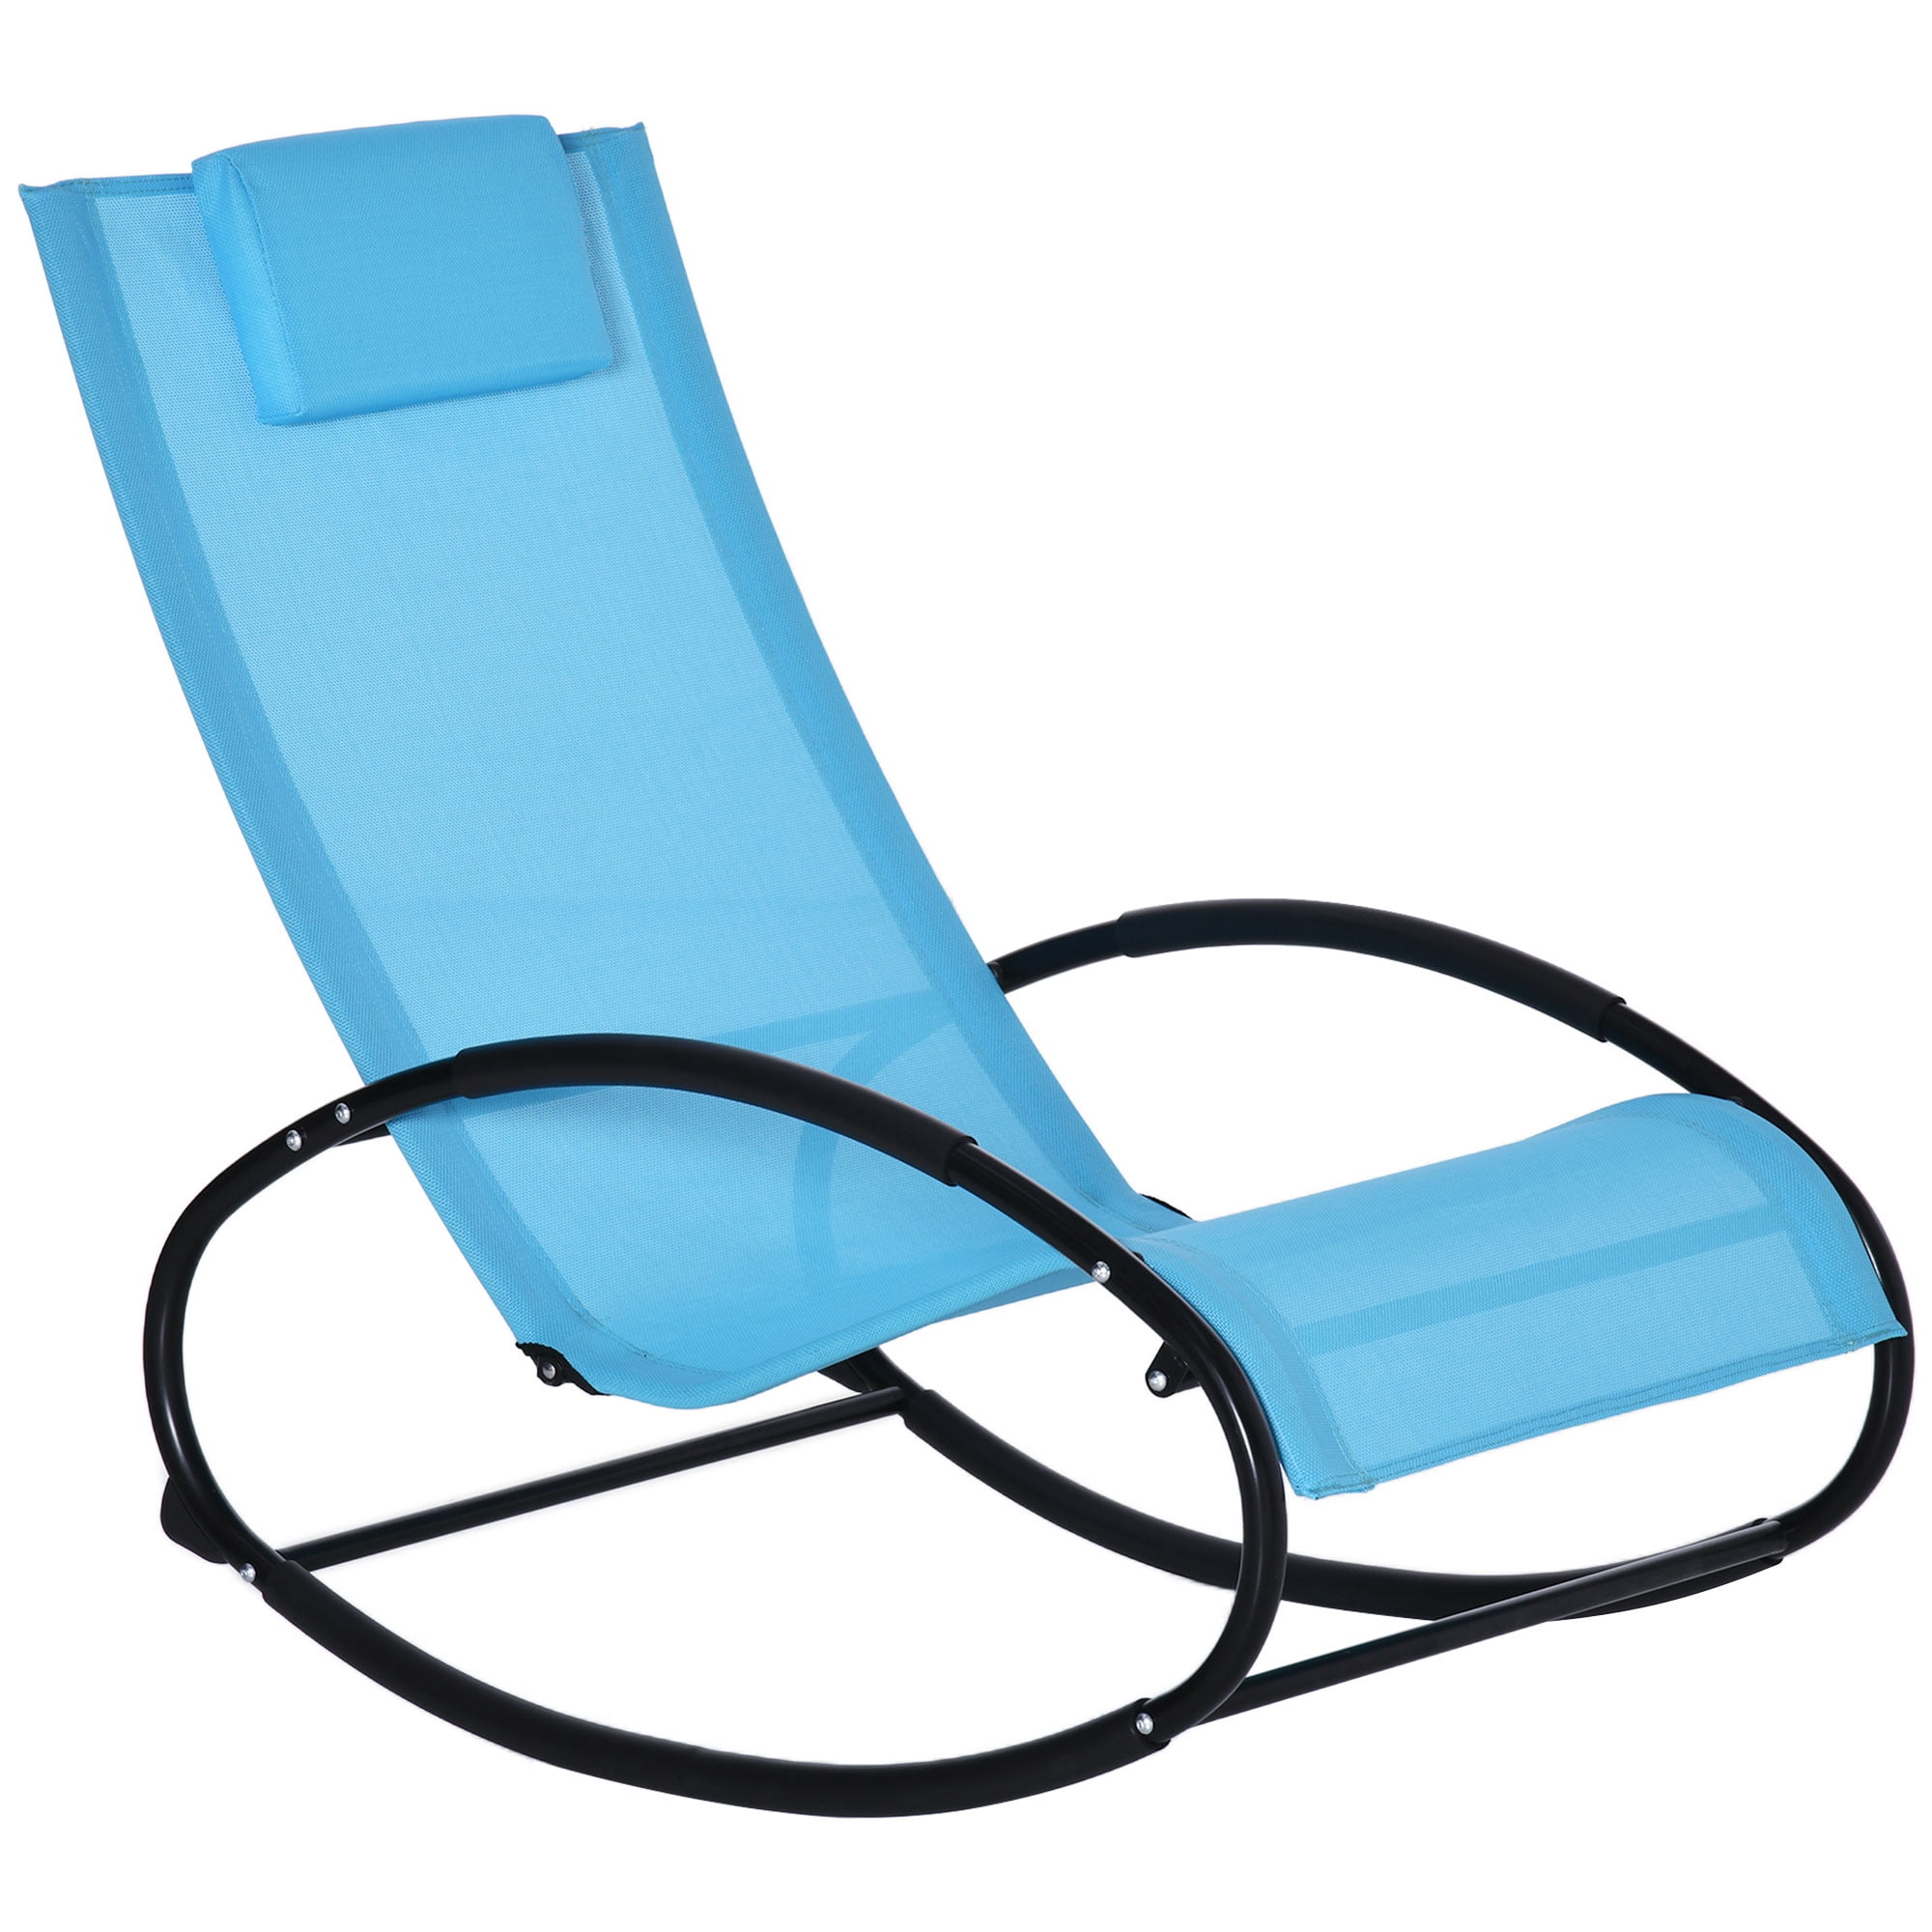 Folding Orbit Zero Gravity Chair Patio Garden Lounger Rocking Relax Outdoor Tan 